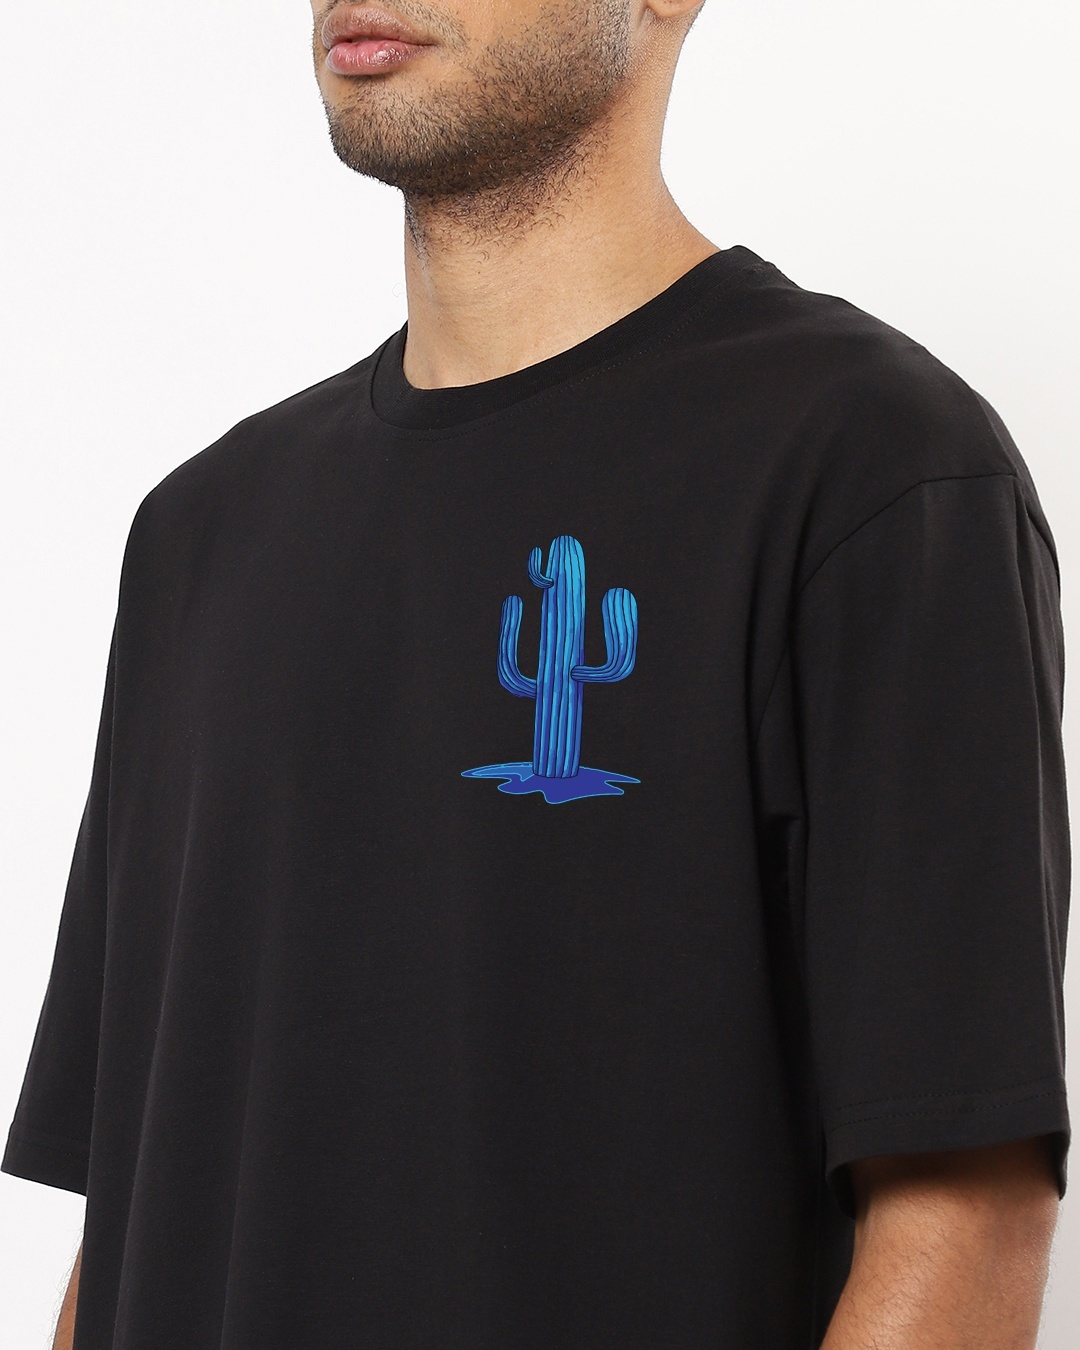 Cactus Printed Oversized T-shirt for Men